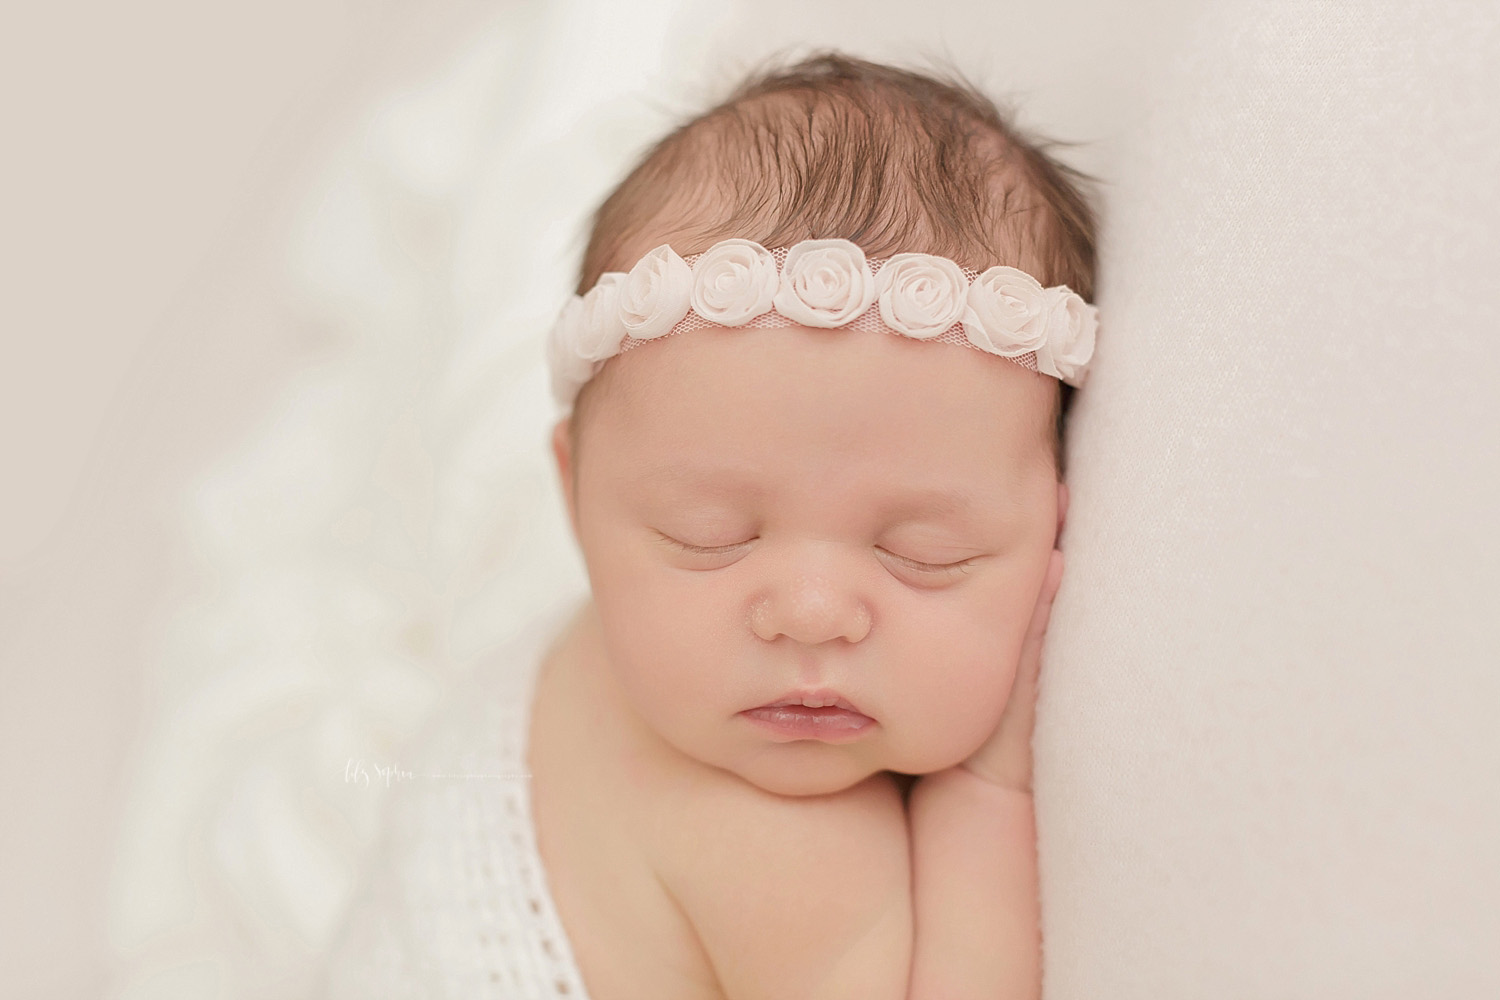  Up close image of a sleeping, newborn, baby, girl, with a rosebud headband in her hair sleeping on her cheek.&nbsp; 